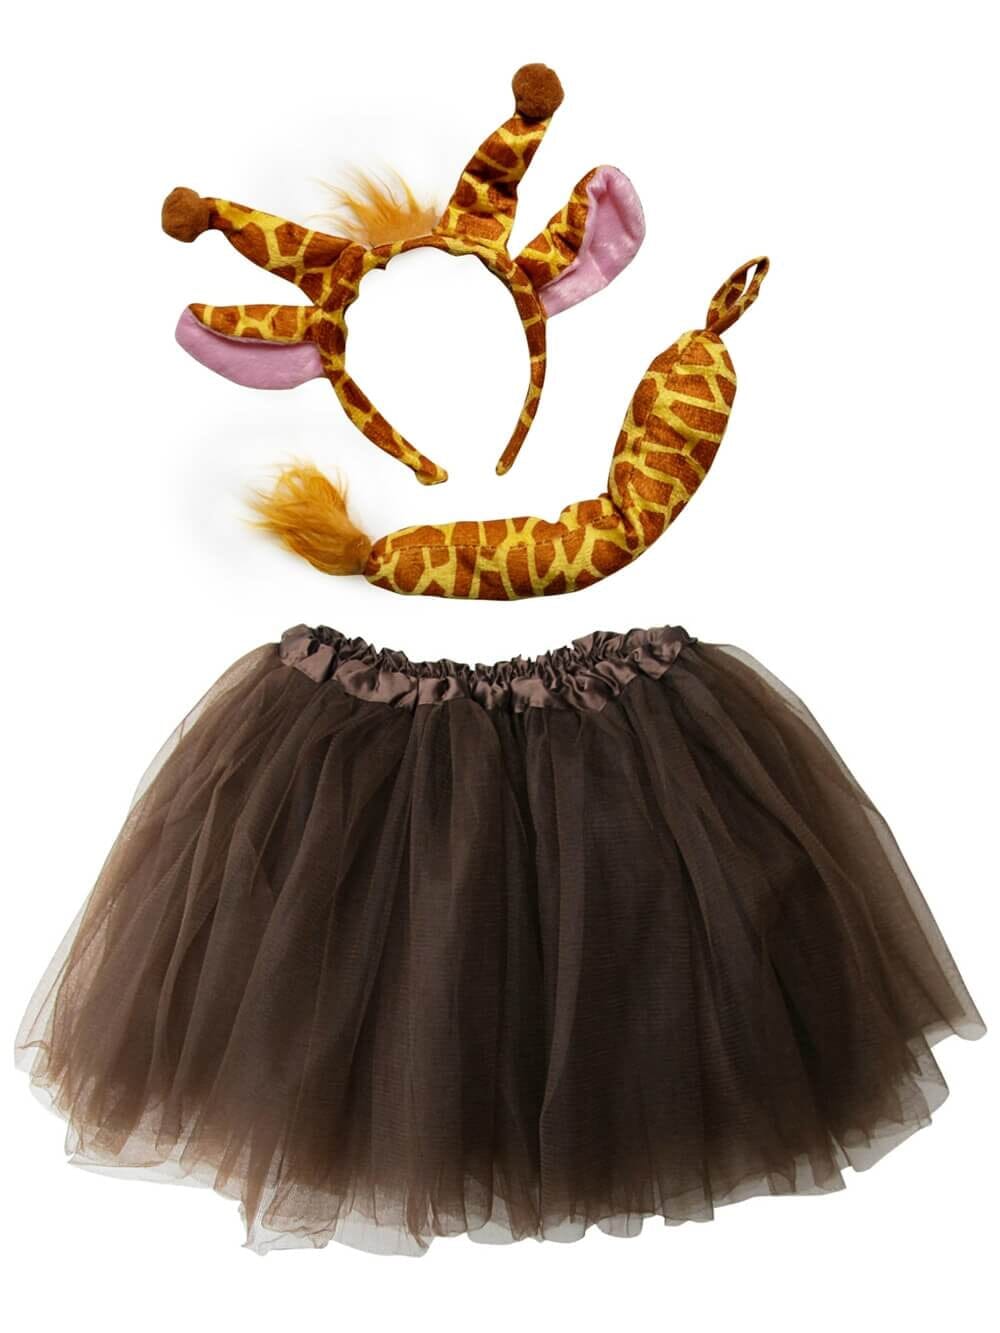 Girls Giraffe Tutu Skirt Costume Complete Set with Tail & Ears - Sydney So Sweet